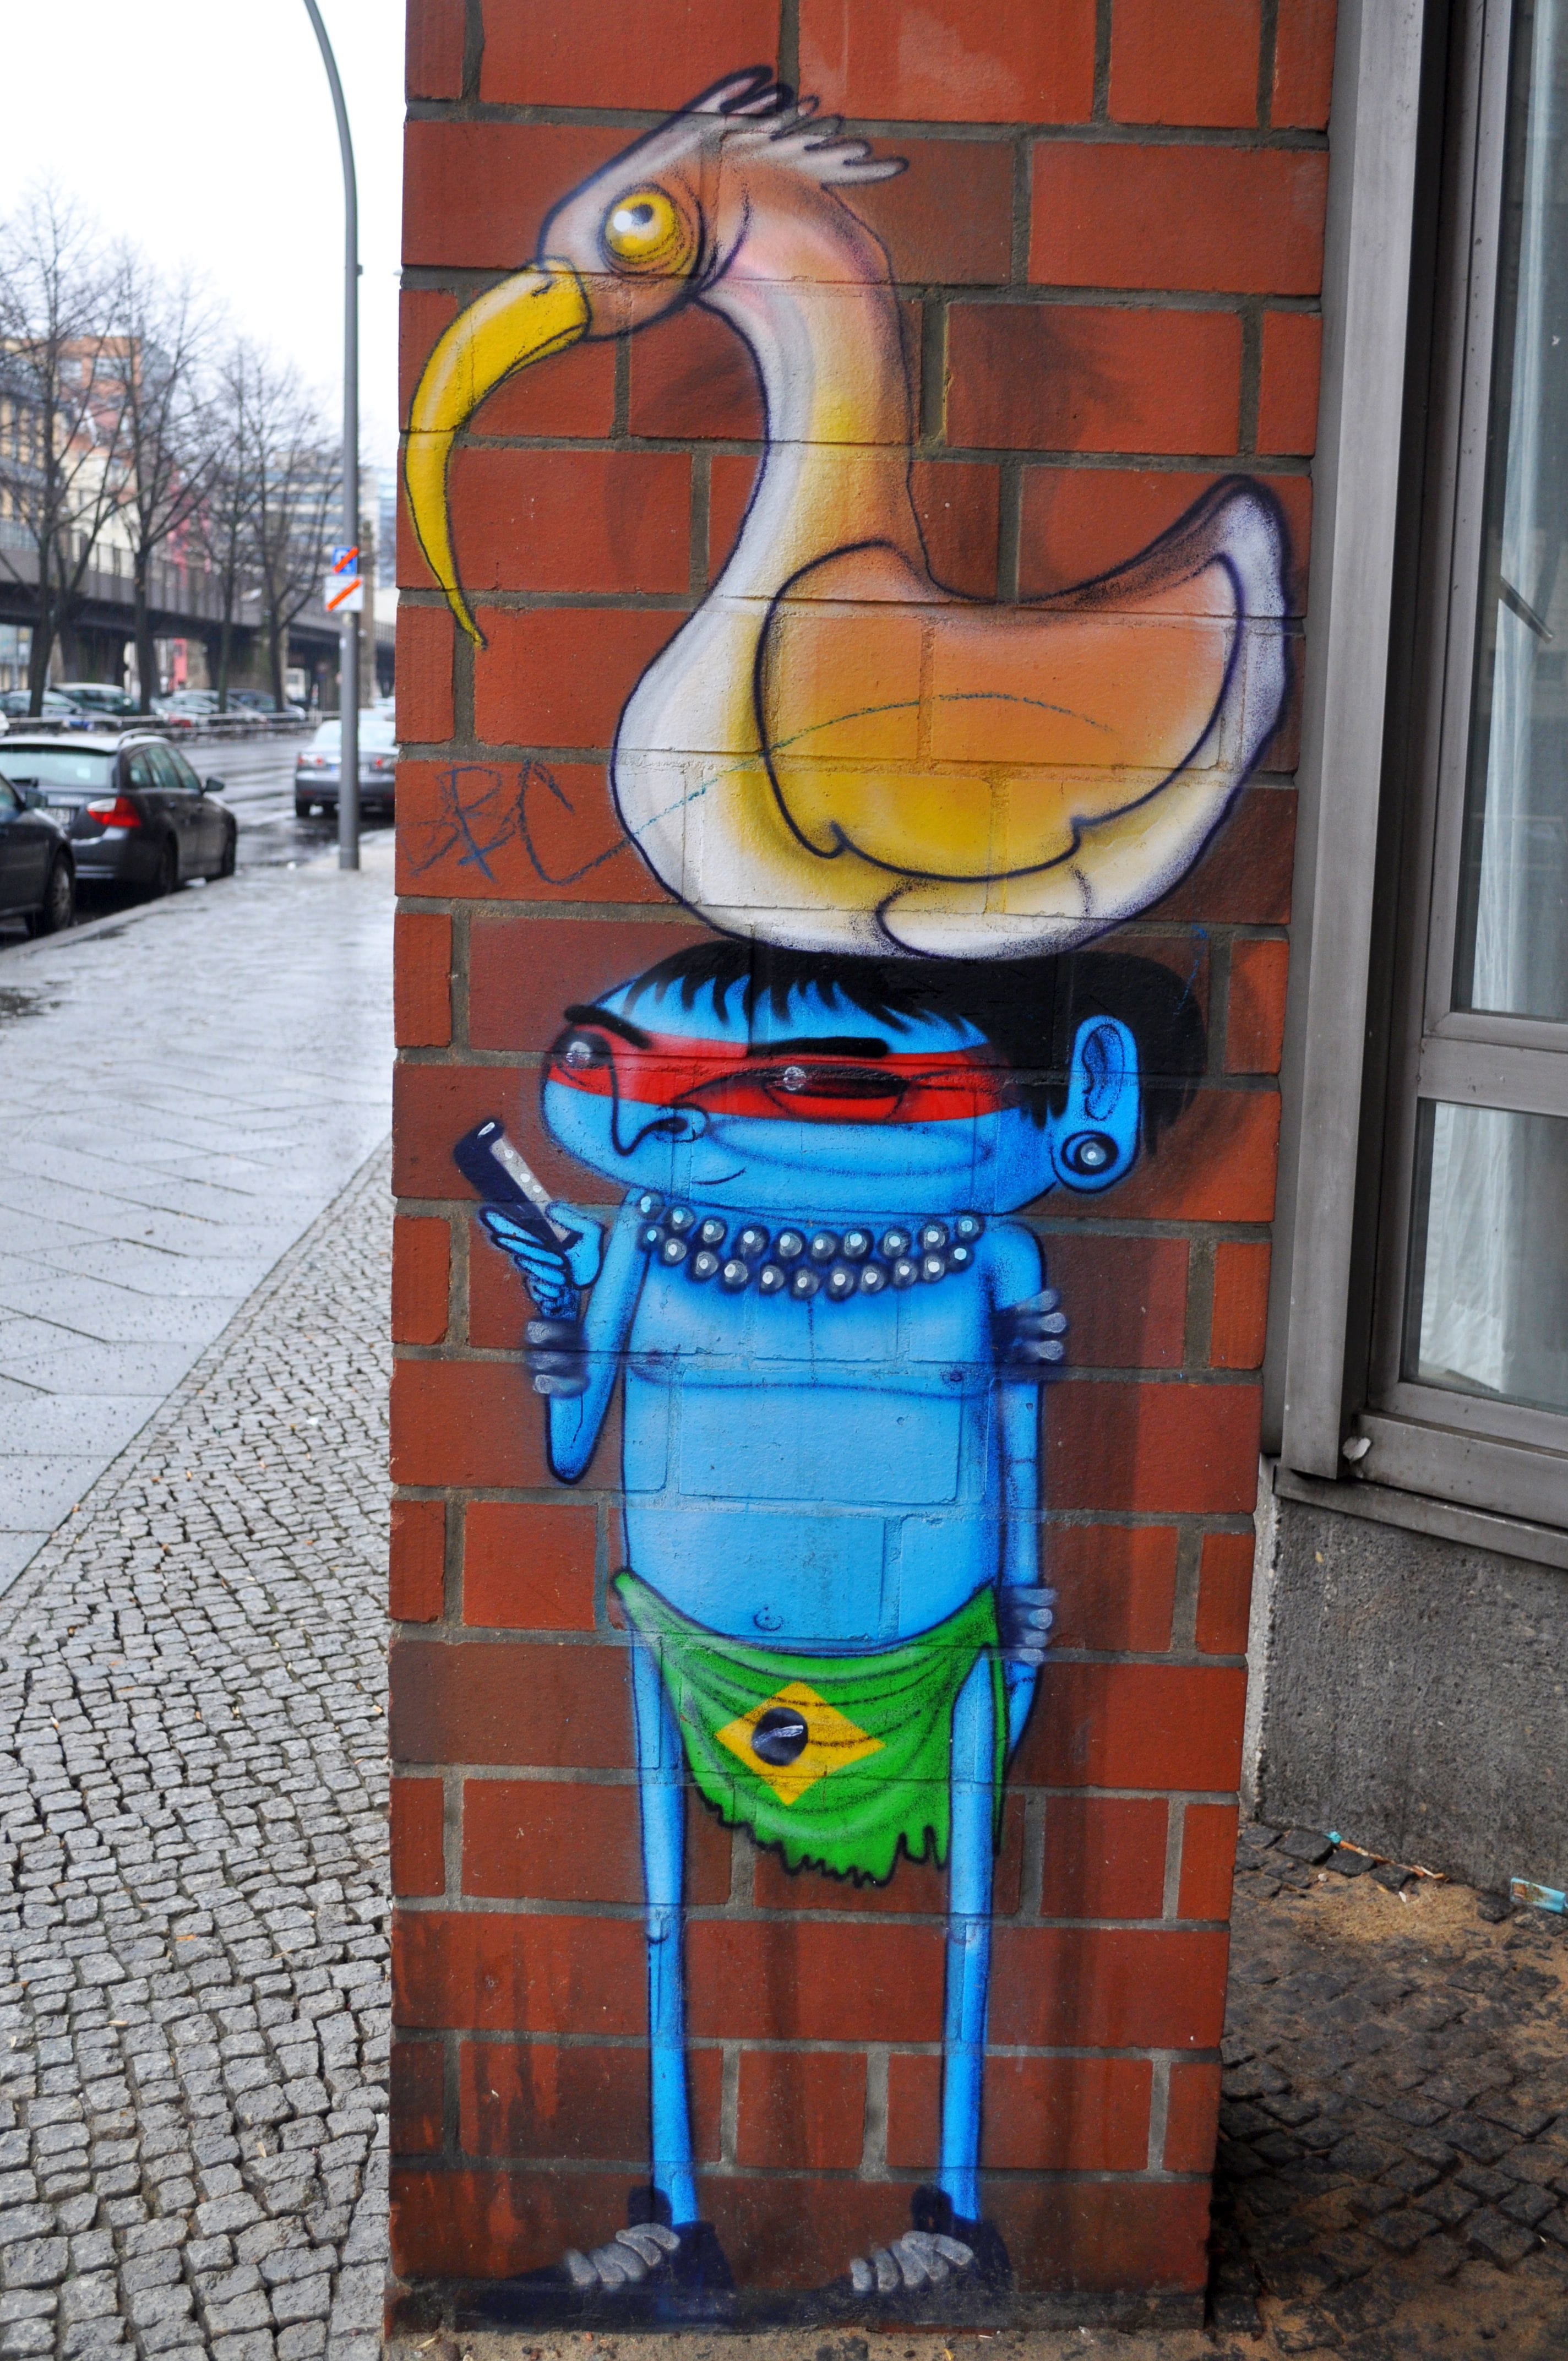 Graffiti 4740  by the artist Cranio captured by elettrotajik in Berlin Germany